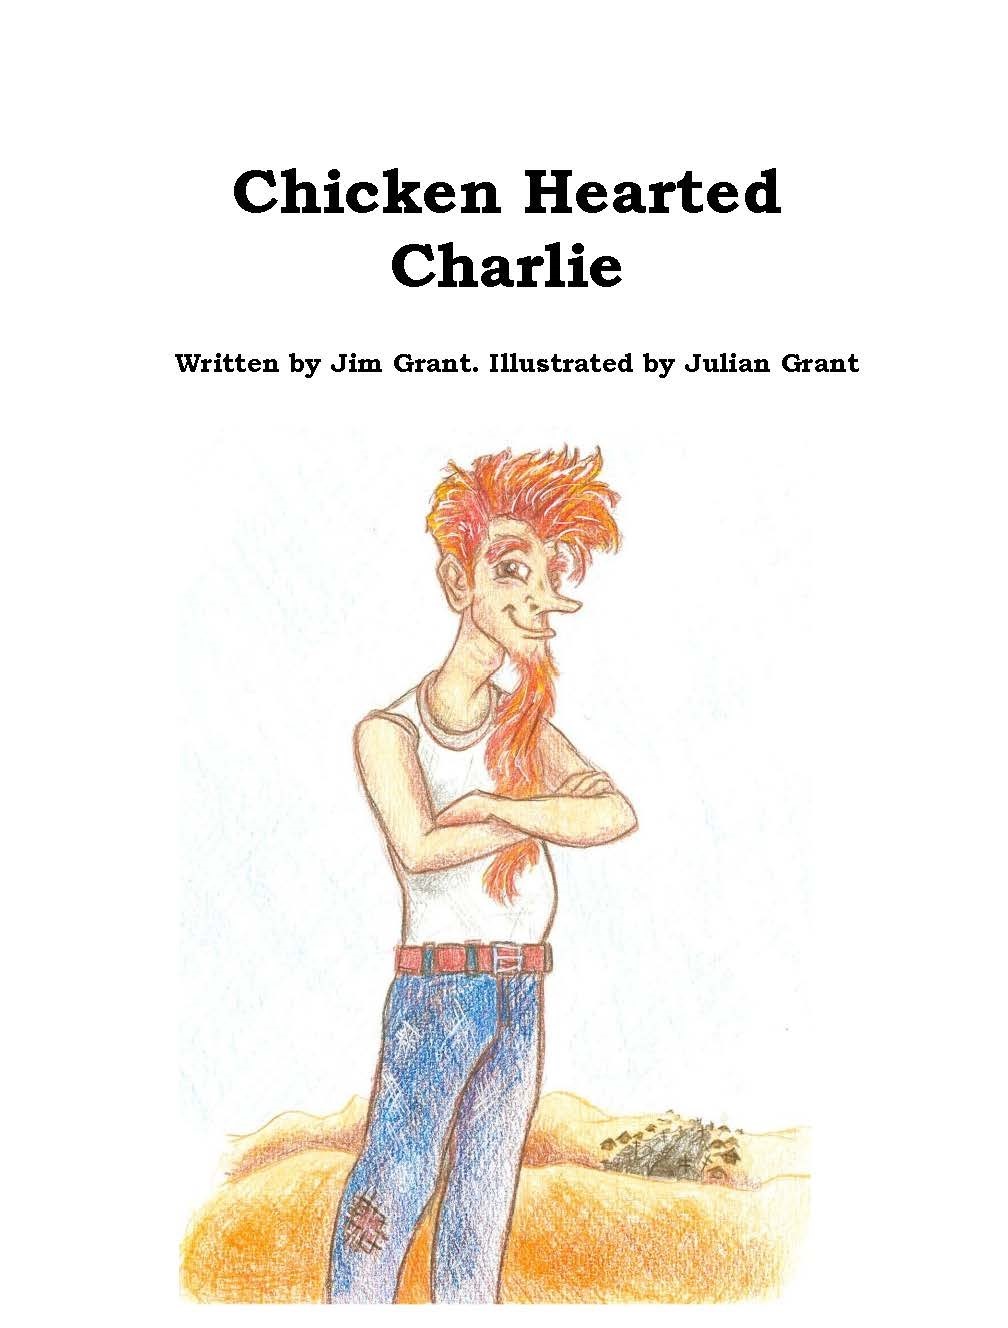 Chicken Hearted Charlie - A children's book